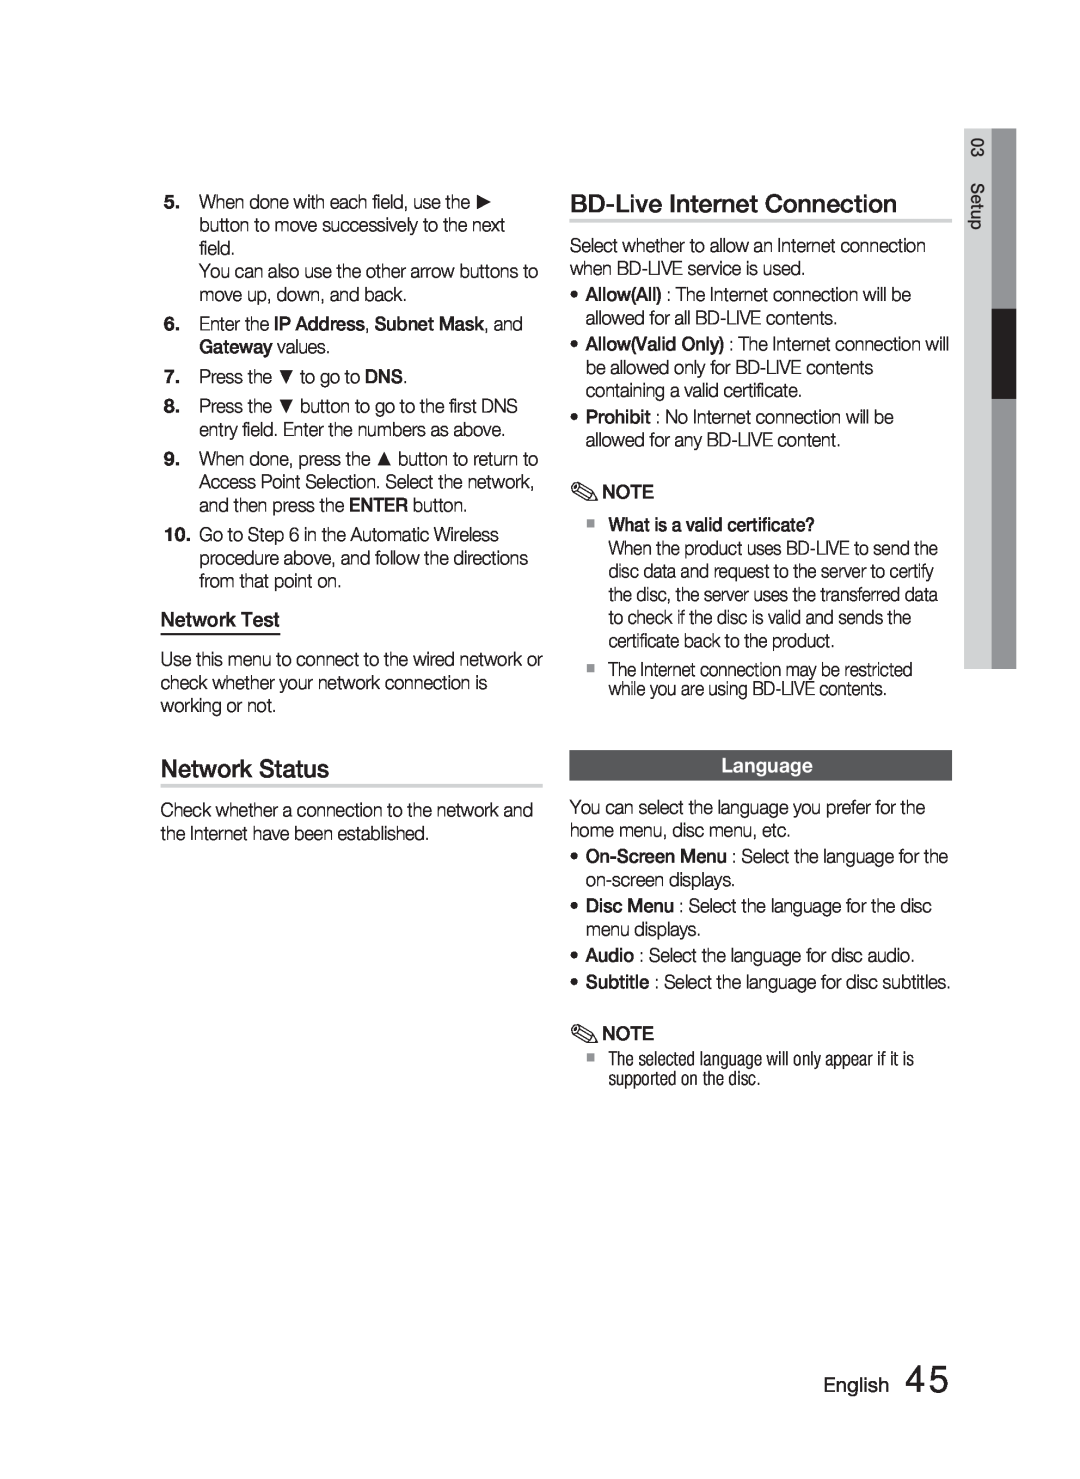 Samsung AH68-02279Y user manual BD-LiveInternet Connection, Network Status, Network Test, Language, English 